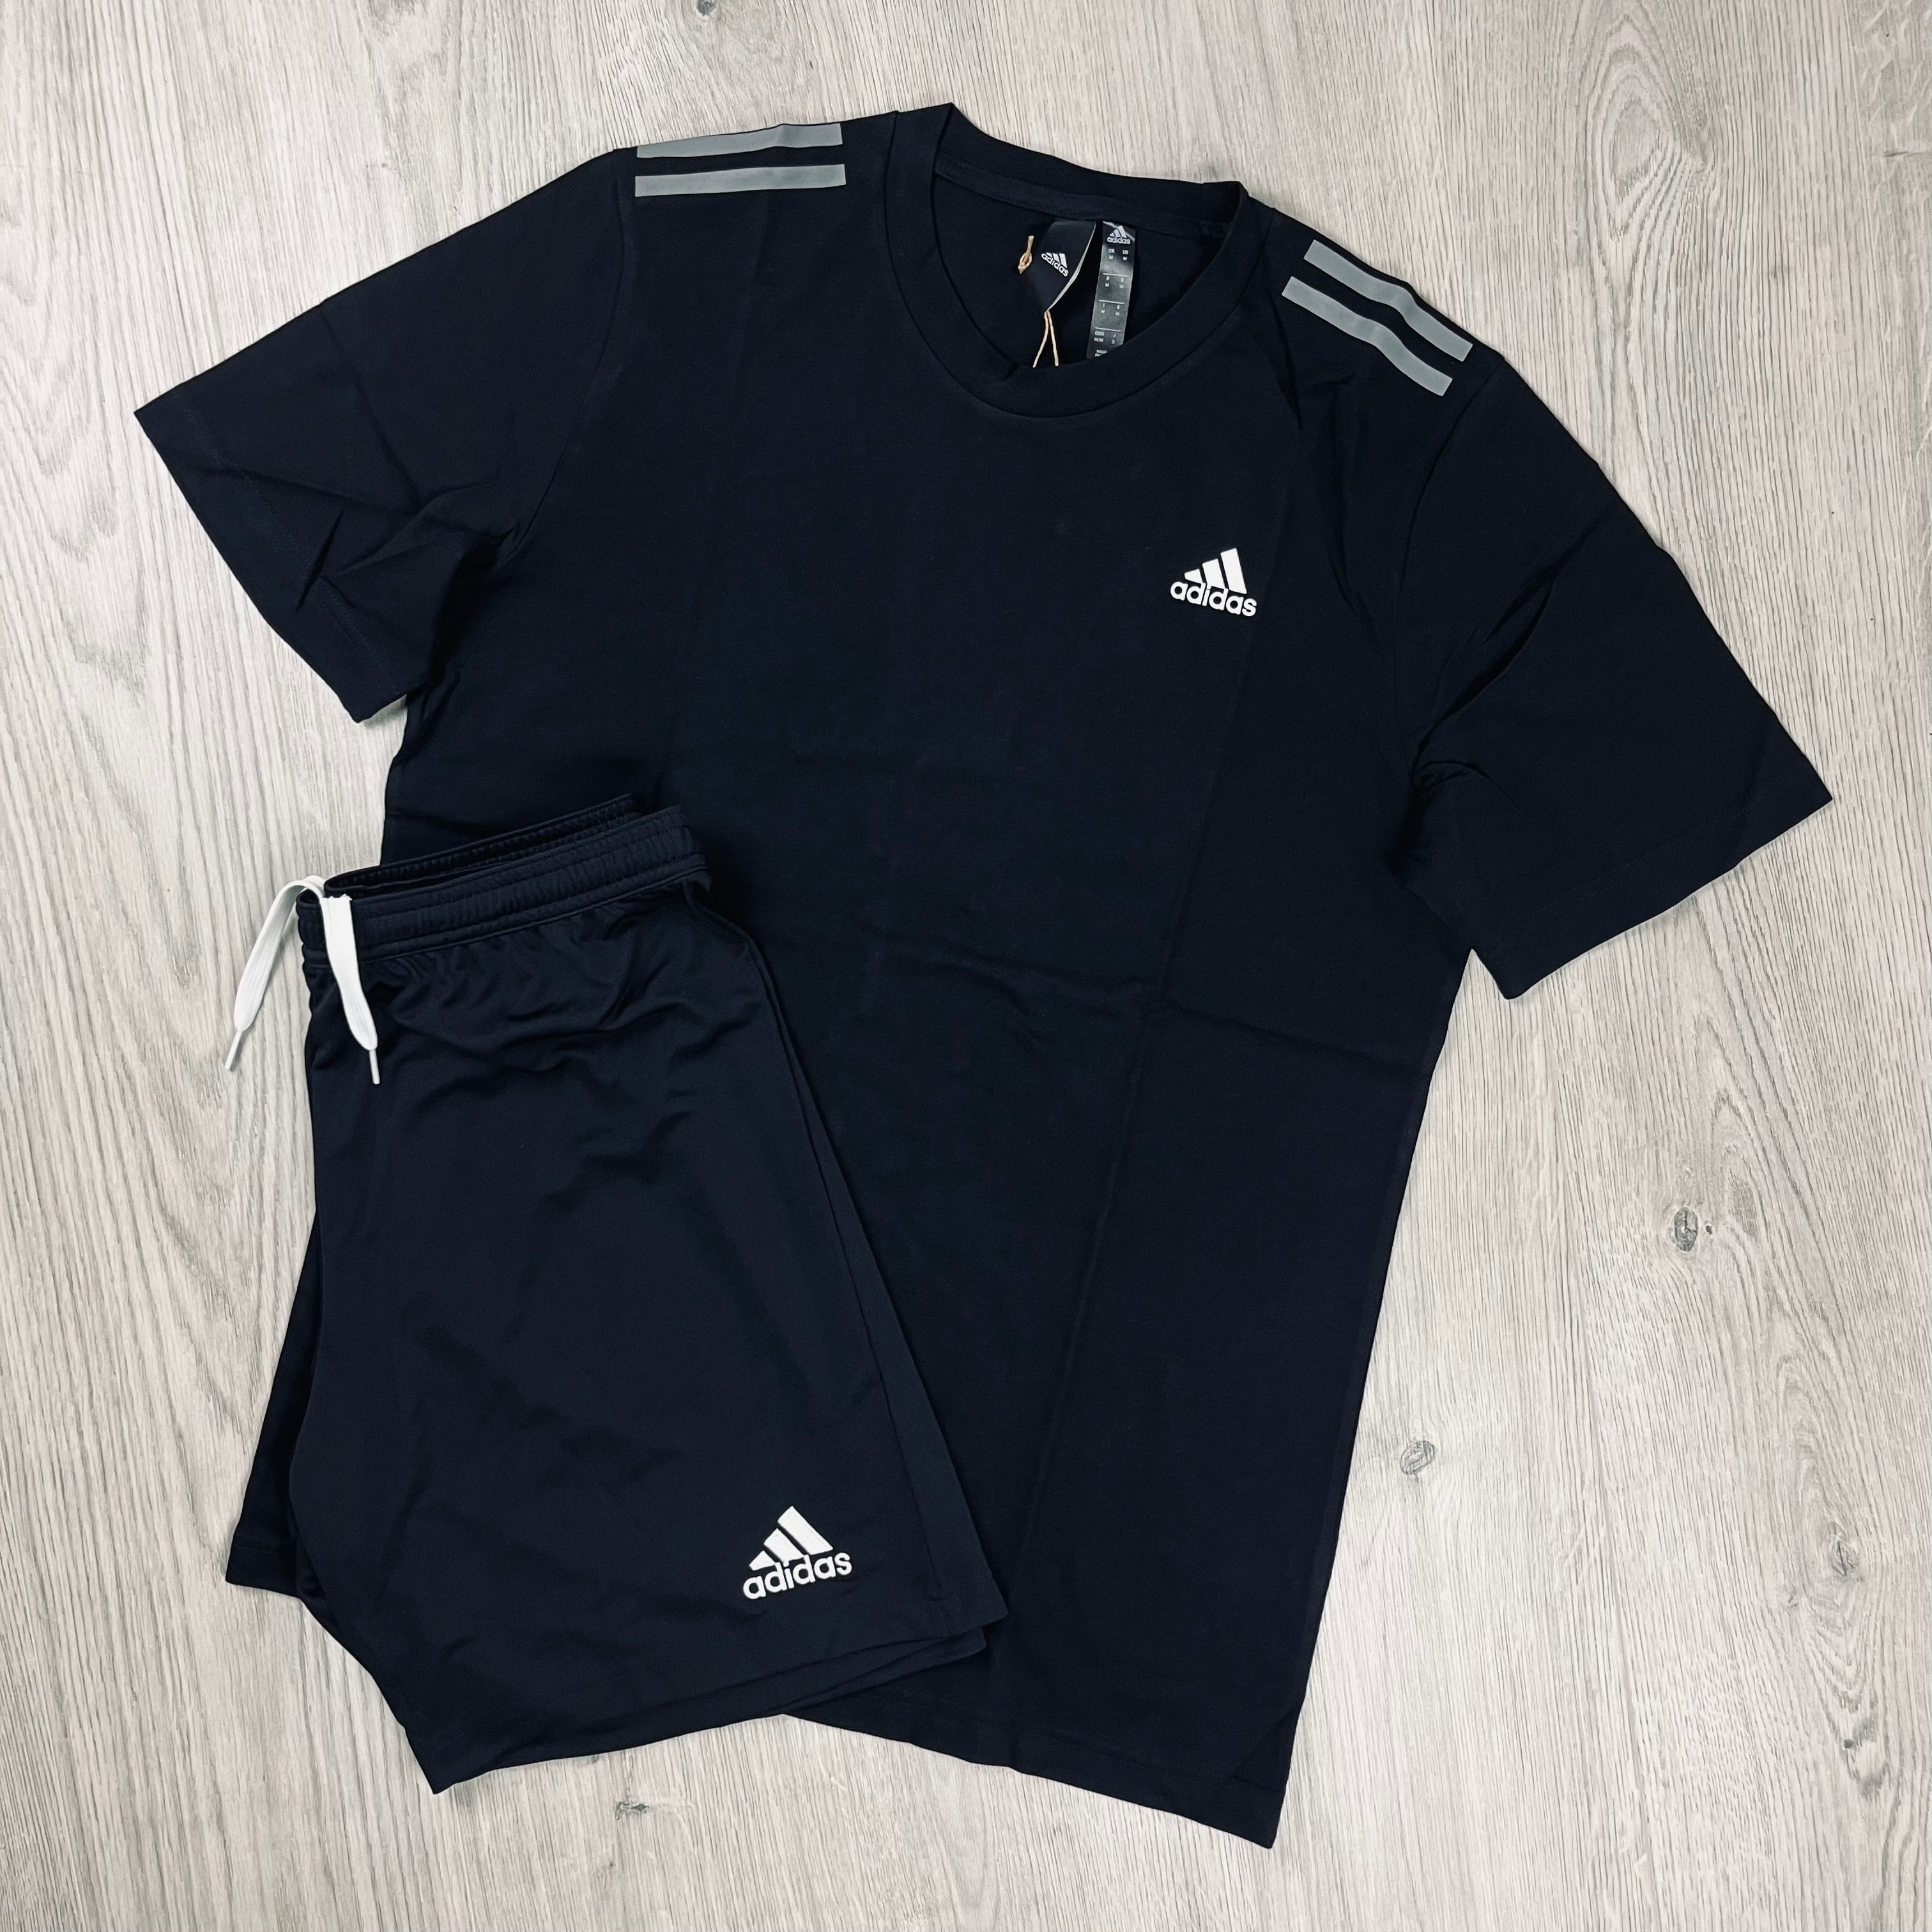 Adidas Set - Black